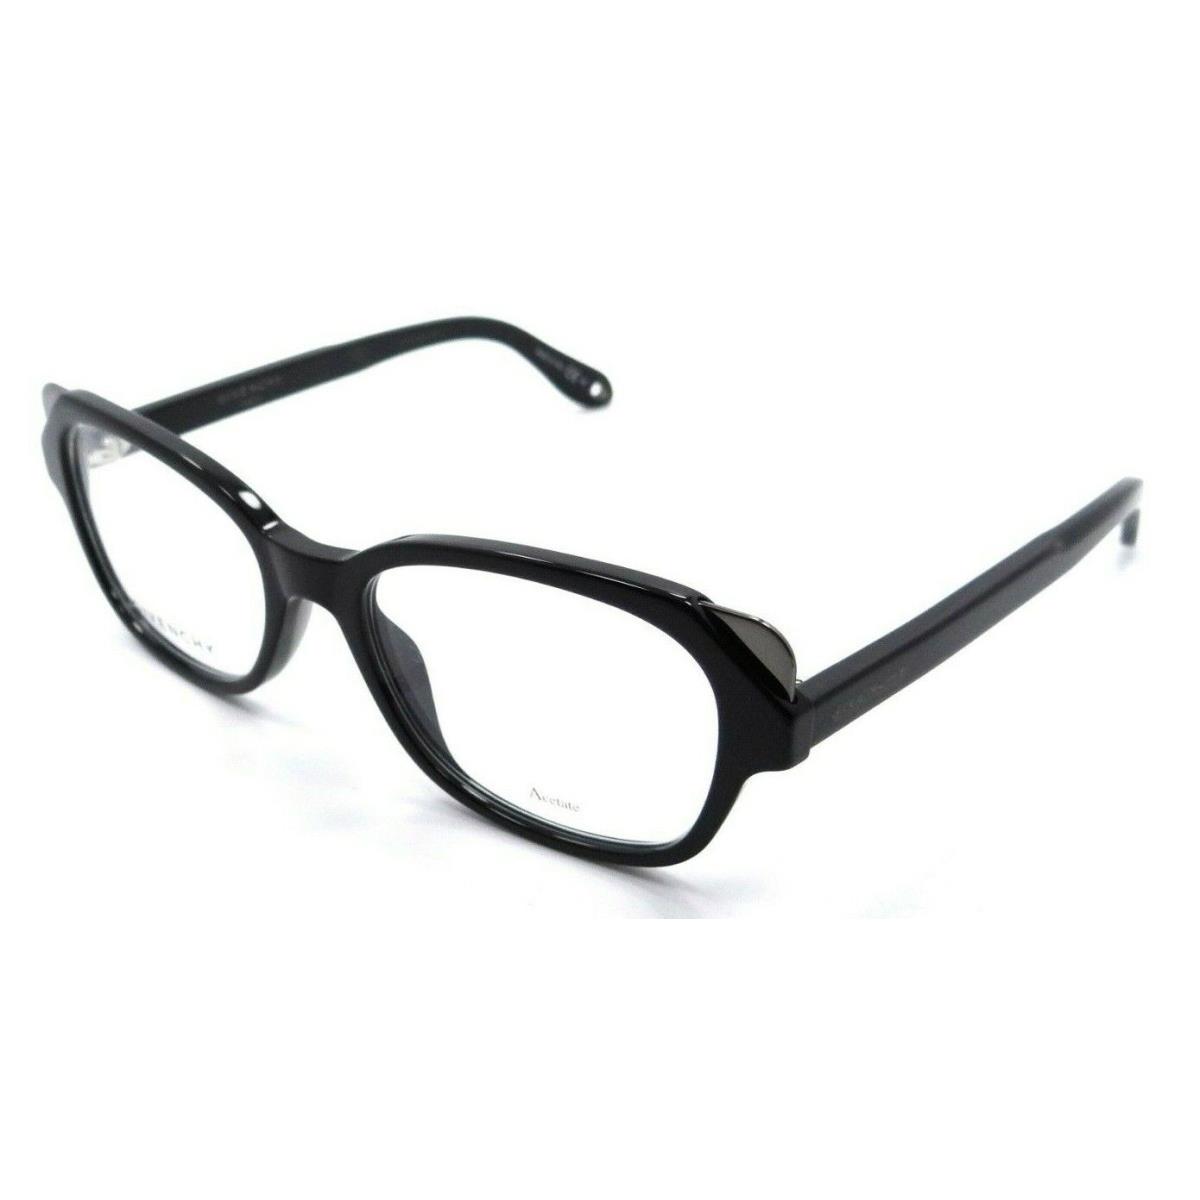 Givenchy Eyeglasses Frames GV 0063 807 51-17-145 Black Made in Italy